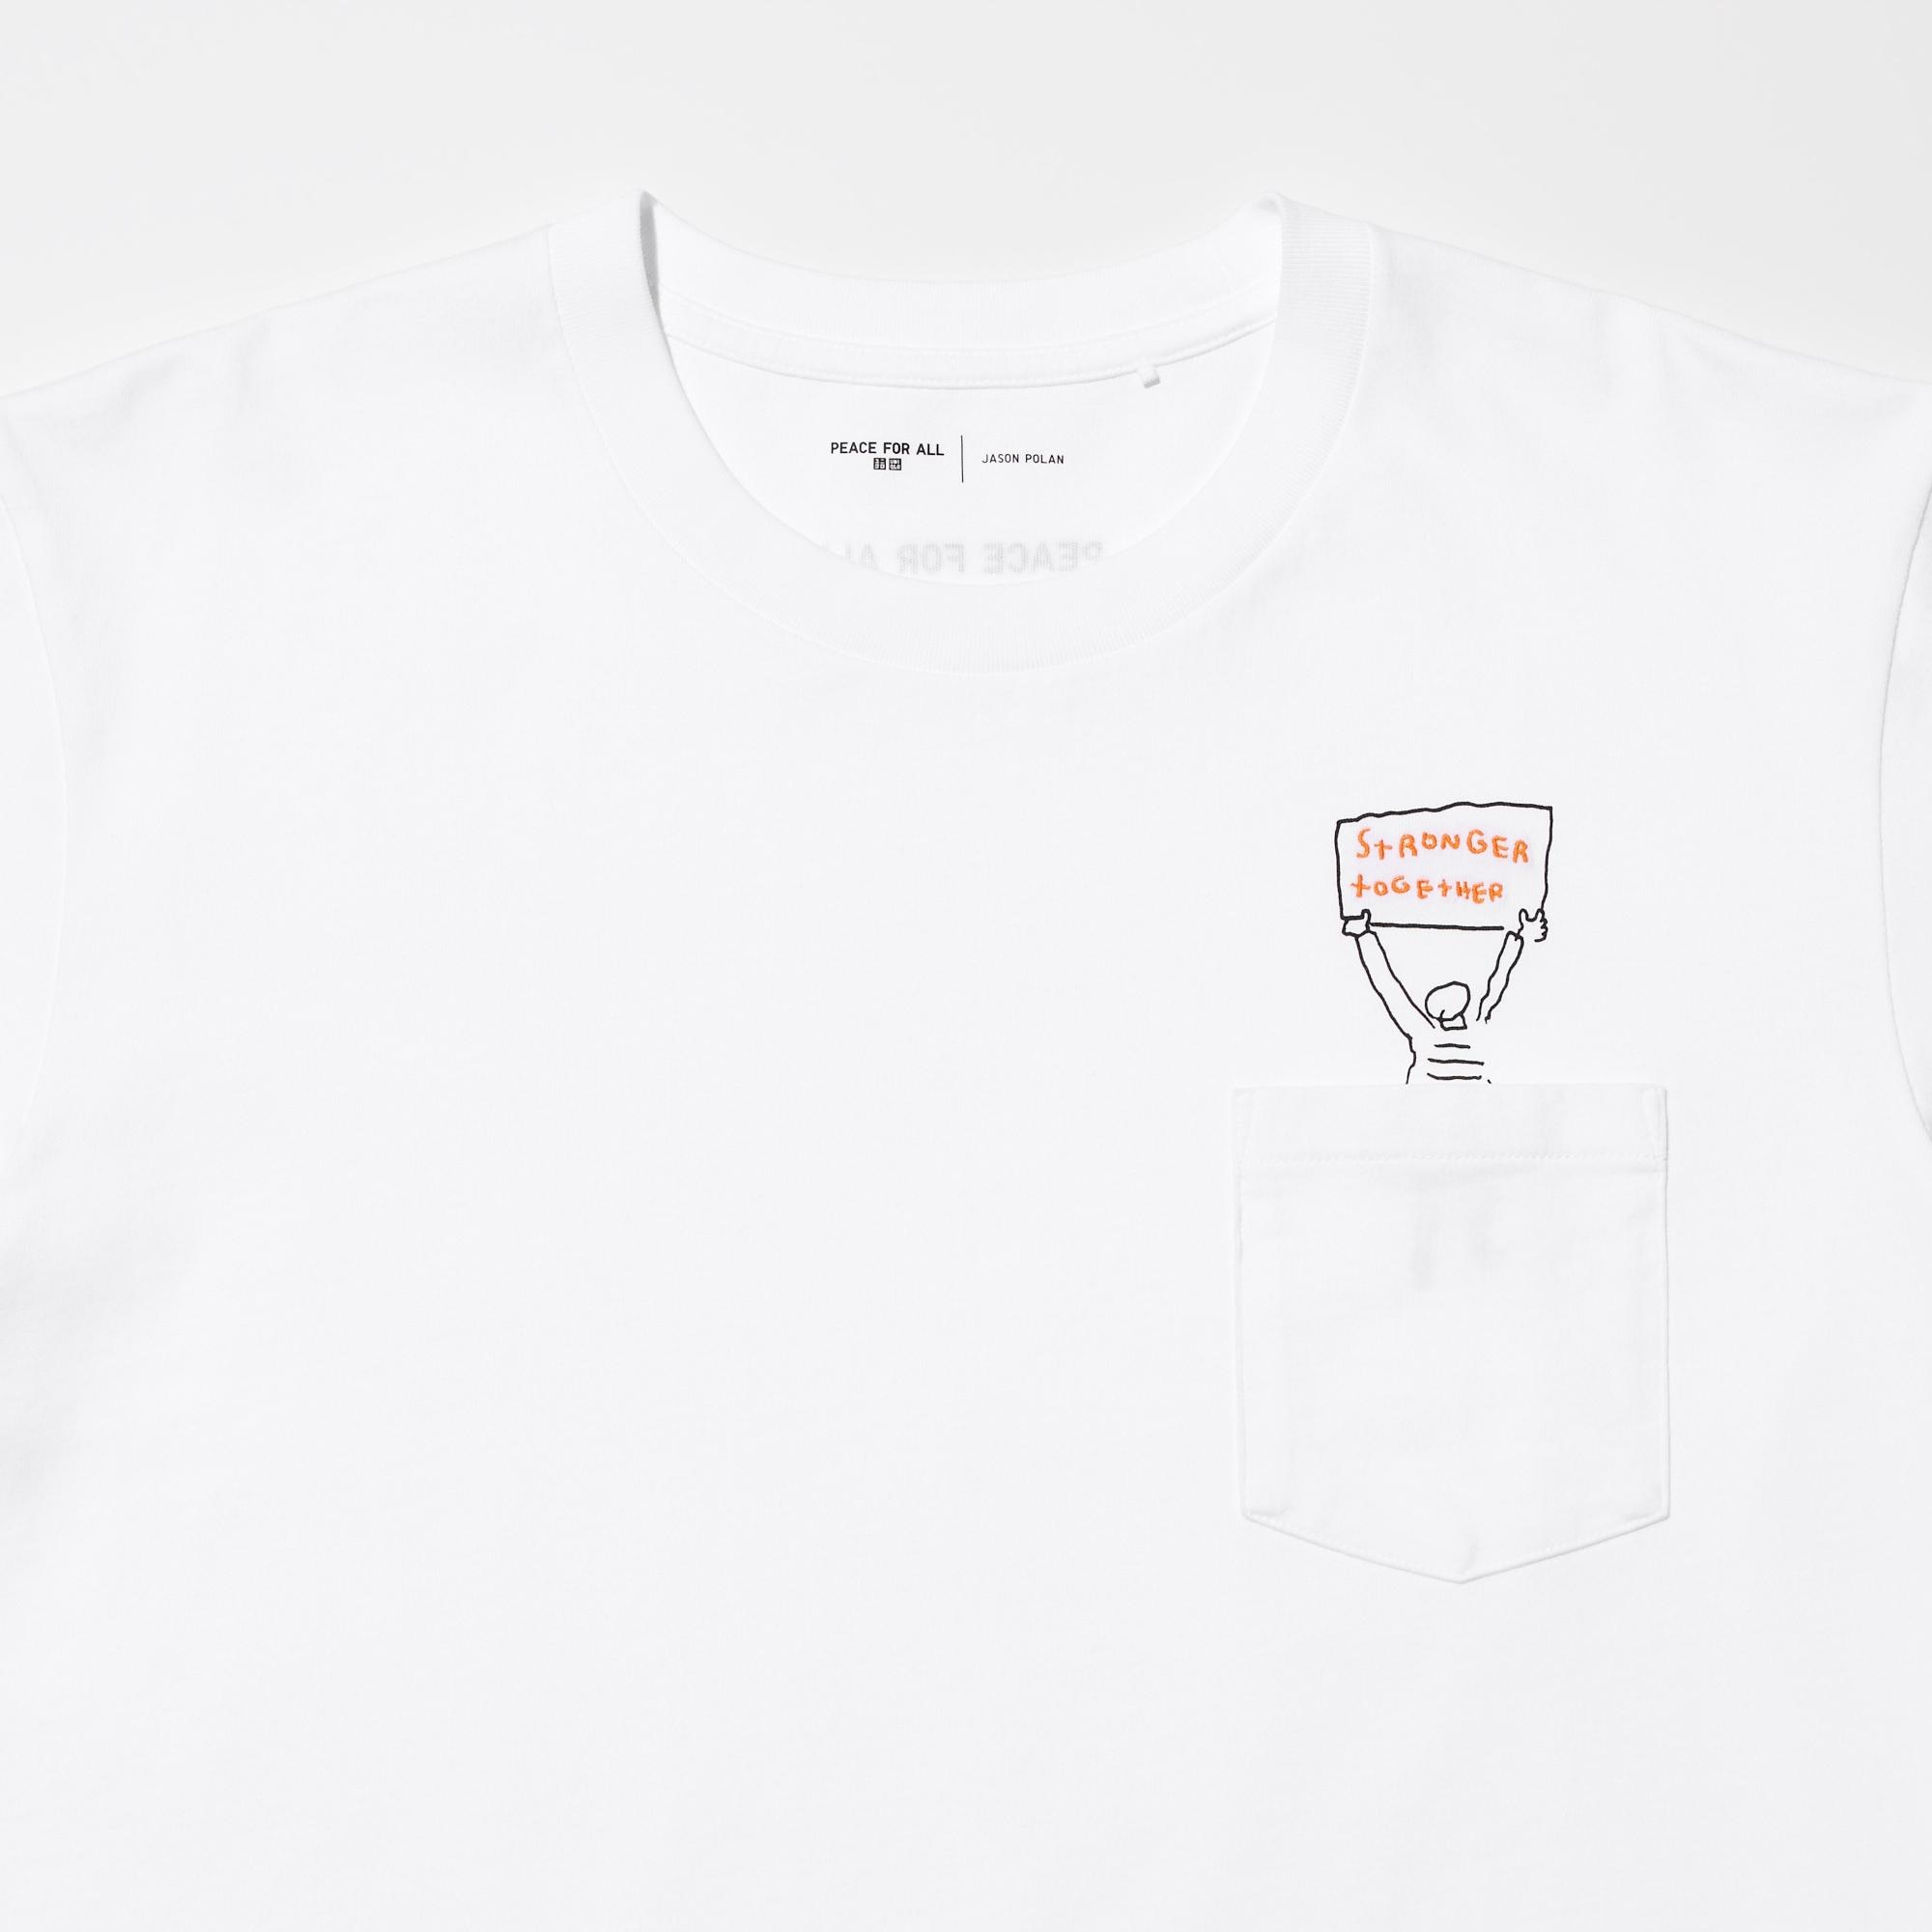 PEACE FOR ALL Short-Sleeve Graphic T-Shirt (Jason Polan)